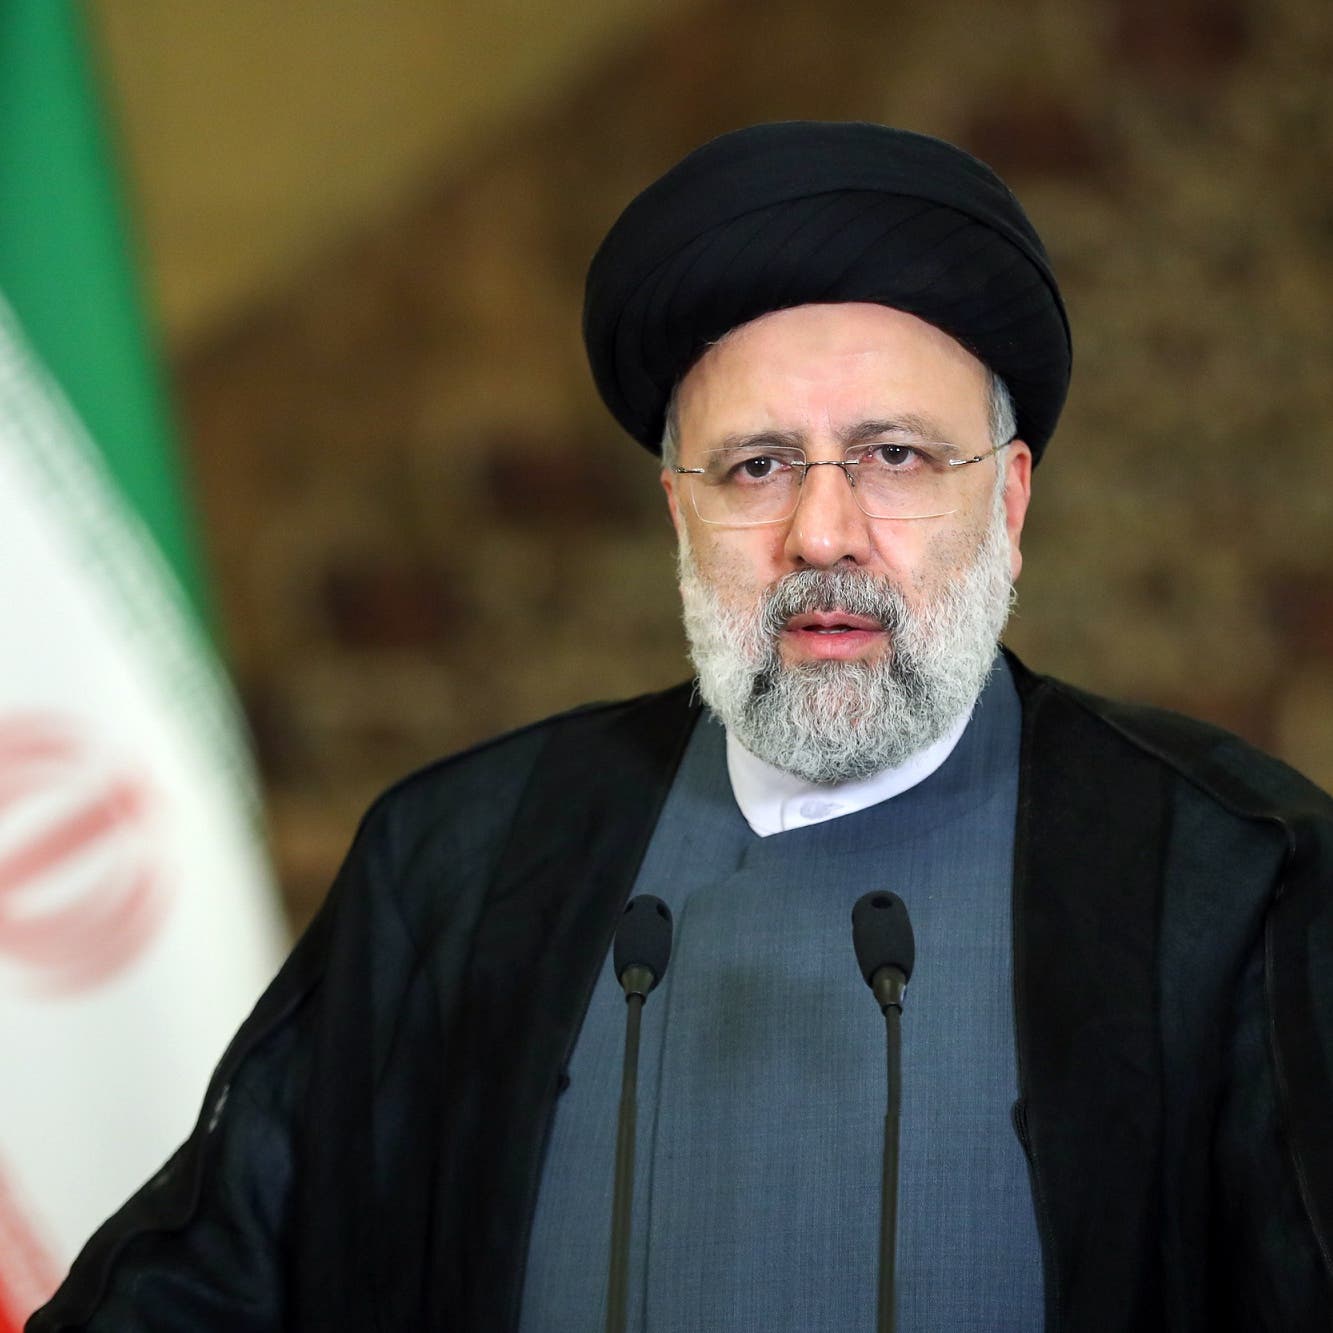 مجددا.. رئيس إيران يهدد برد حاسم  على أي هجوم